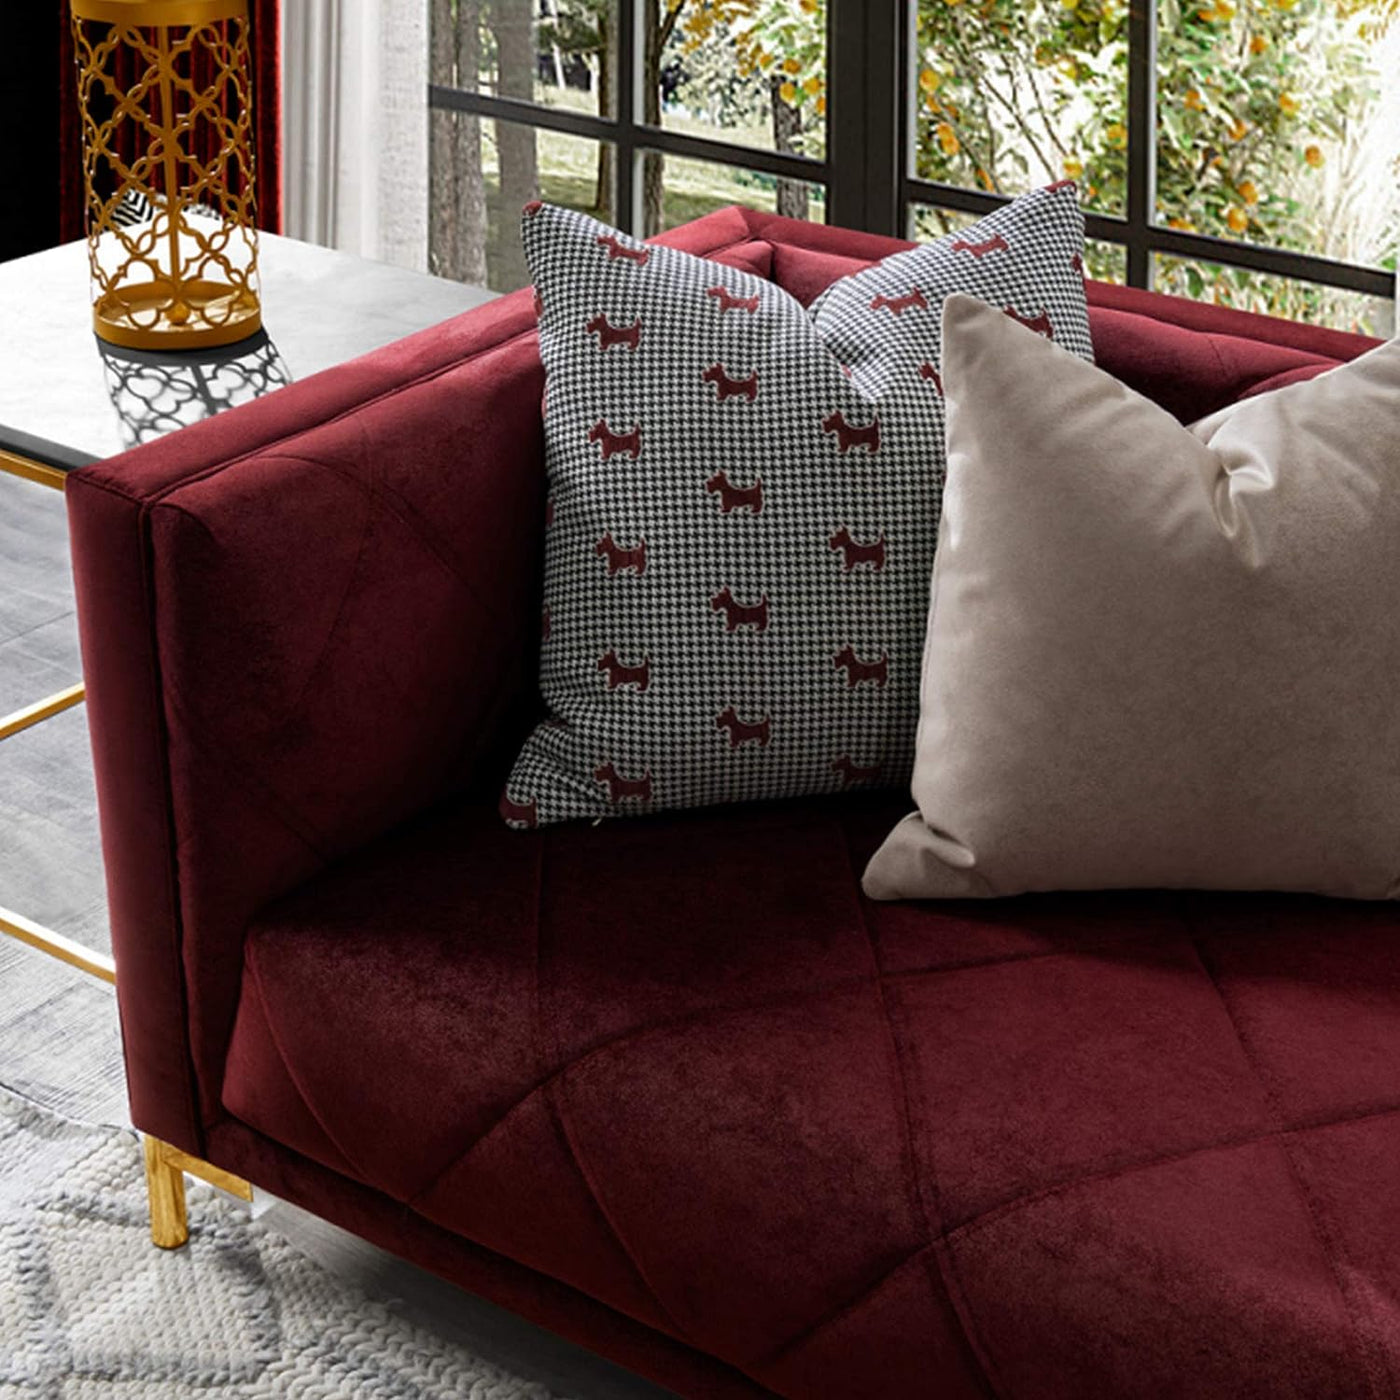 Acanva Modern Mid-Century Sofa with Velvet Upholstered Fabric - $850